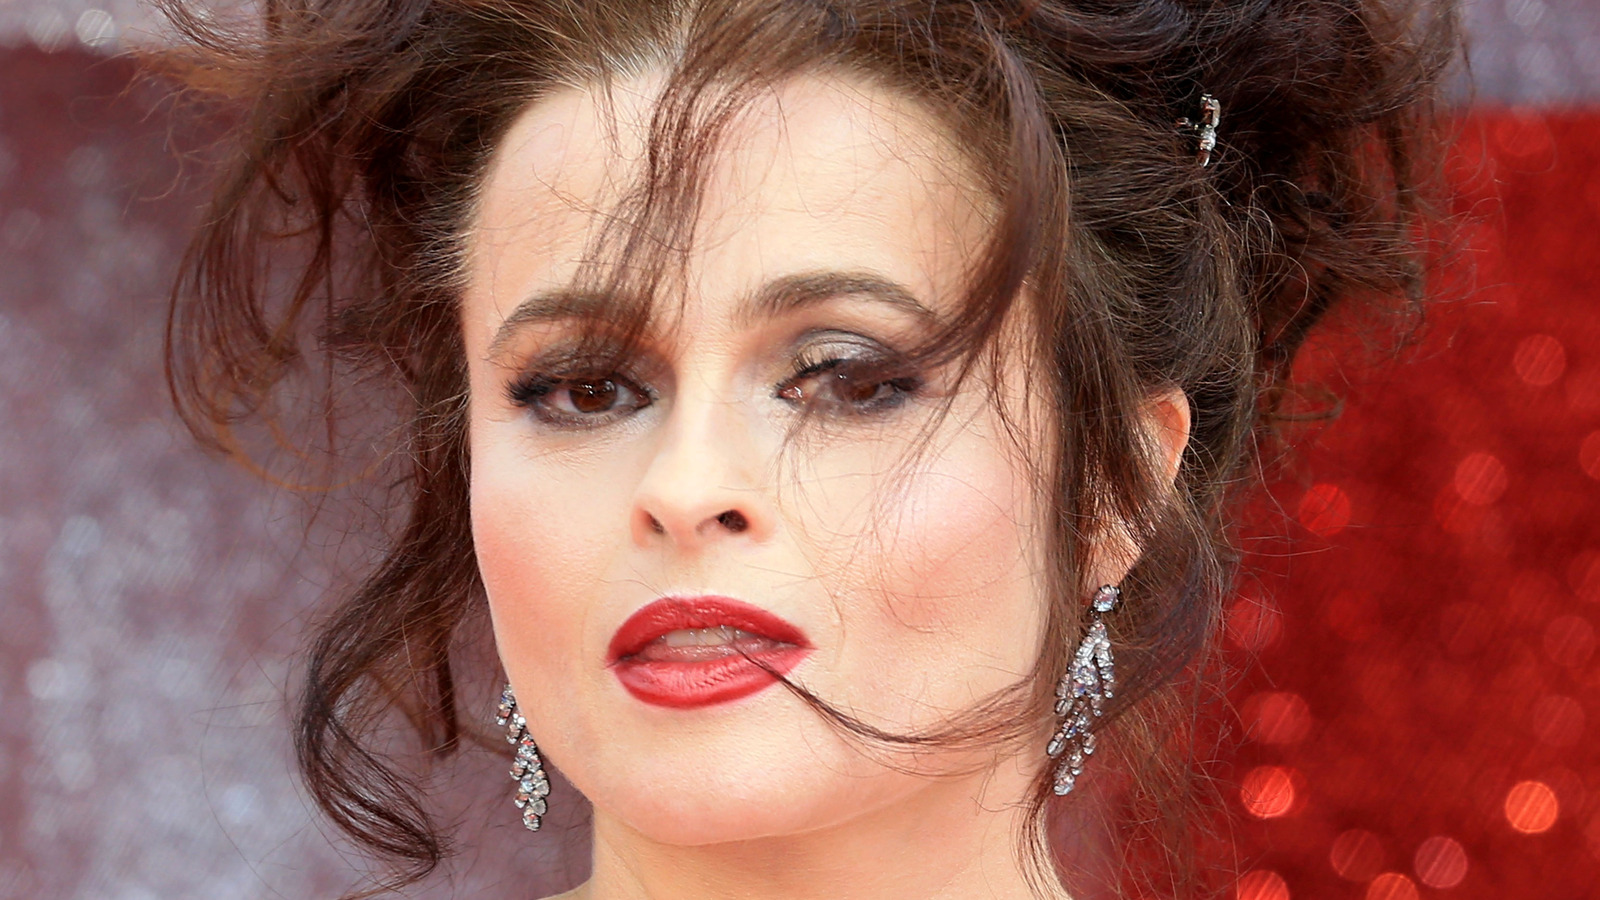 Every Helena Bonham Carter Movie Ranked Worst To Best pic